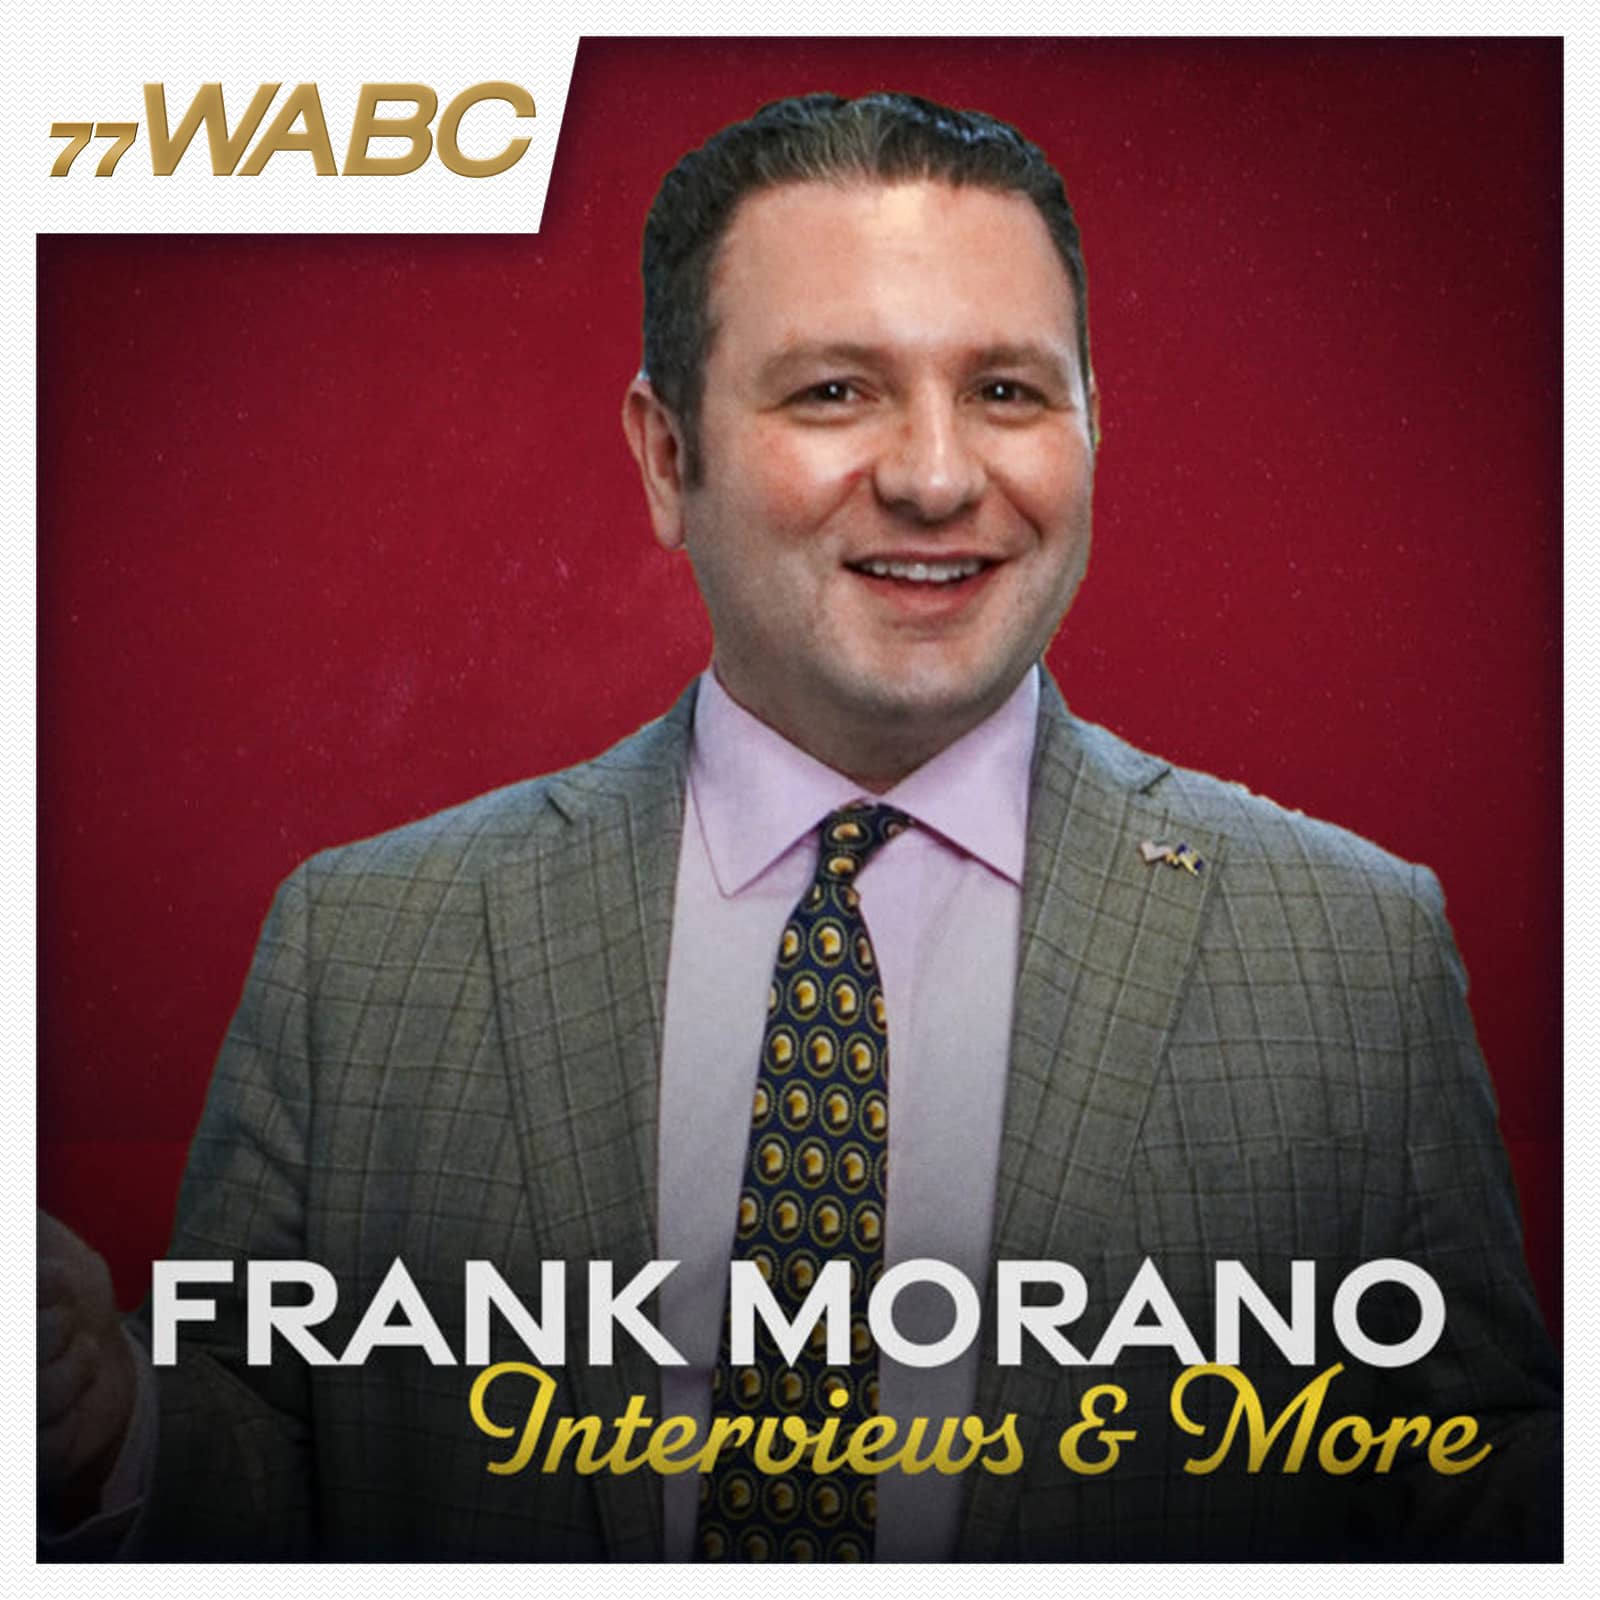 frank-morano-interviews-and-more-podcast-new-logo-319